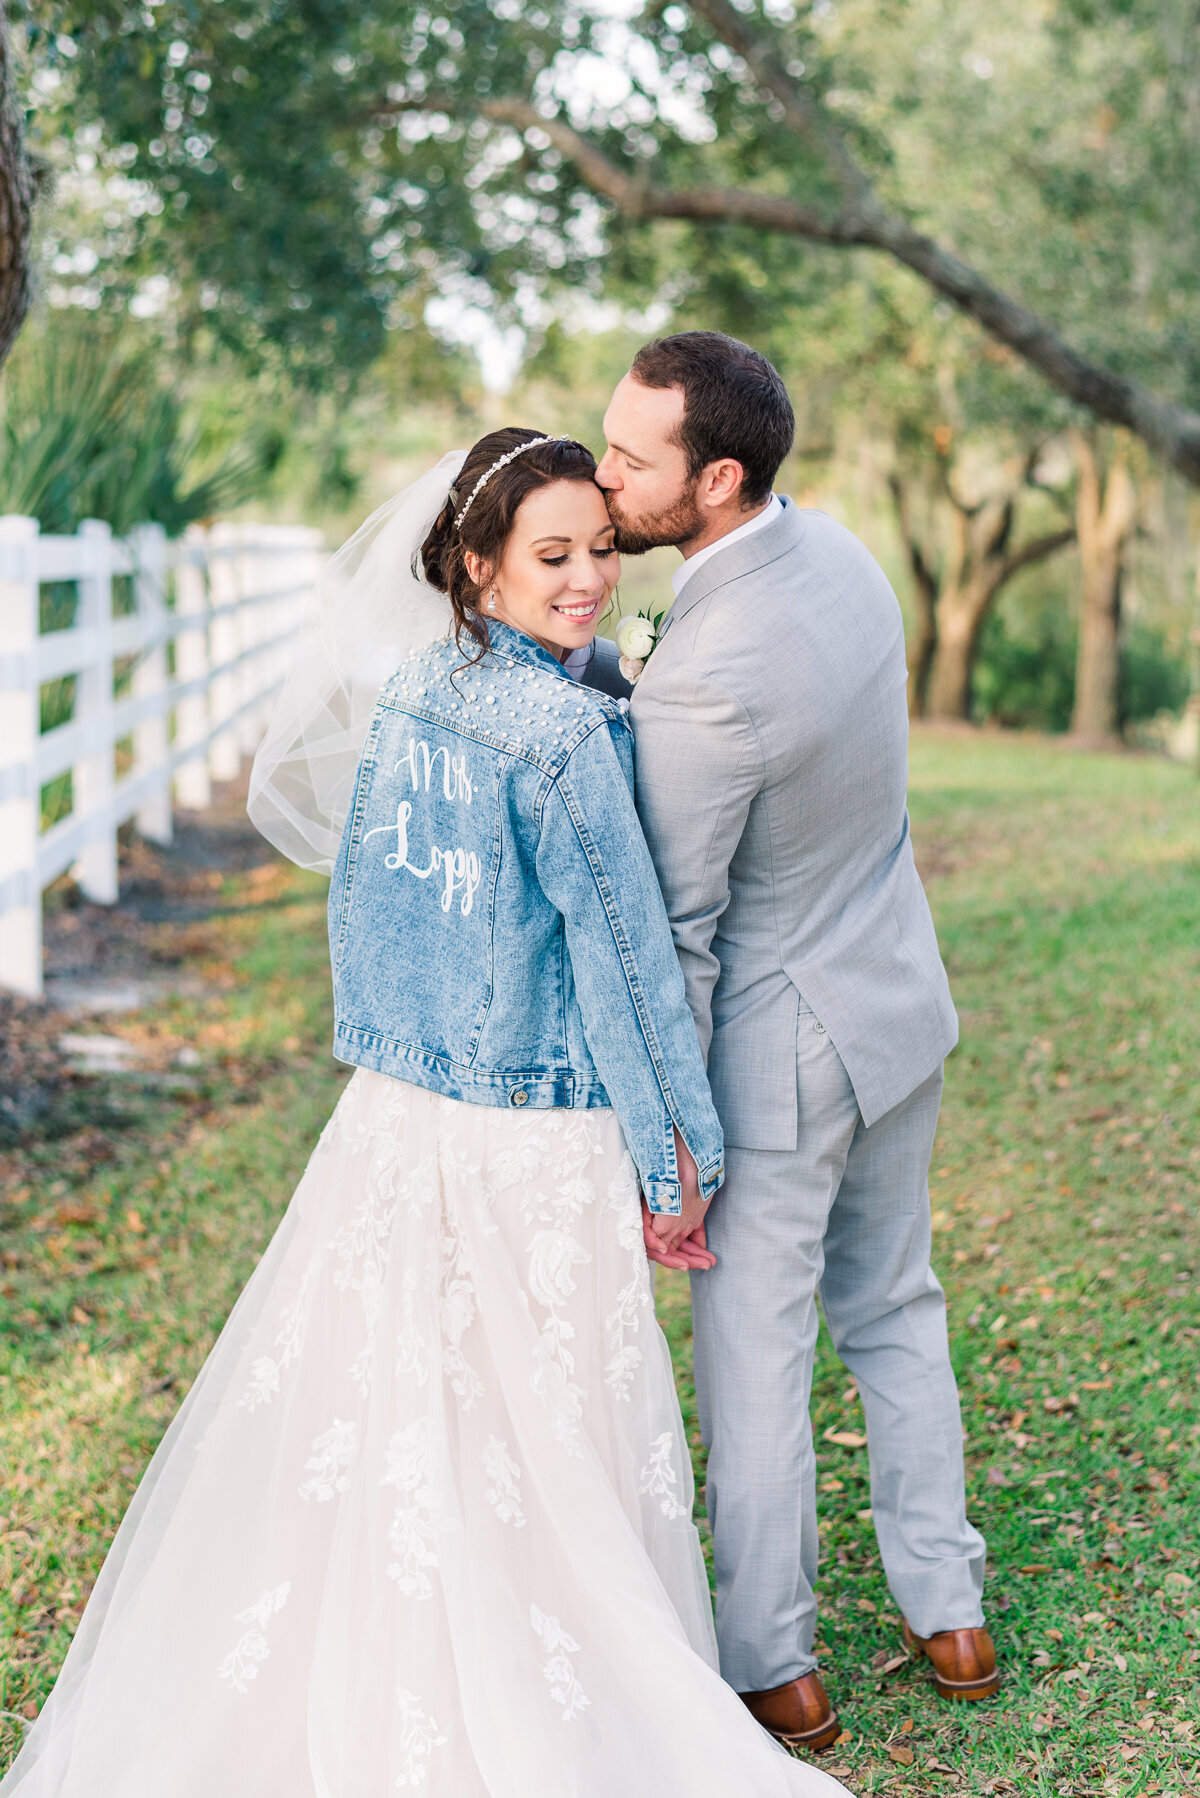 Tiffany & Garret Up the Creek Farms Wedding Bridal Portrait | Lisa Marshall Photography